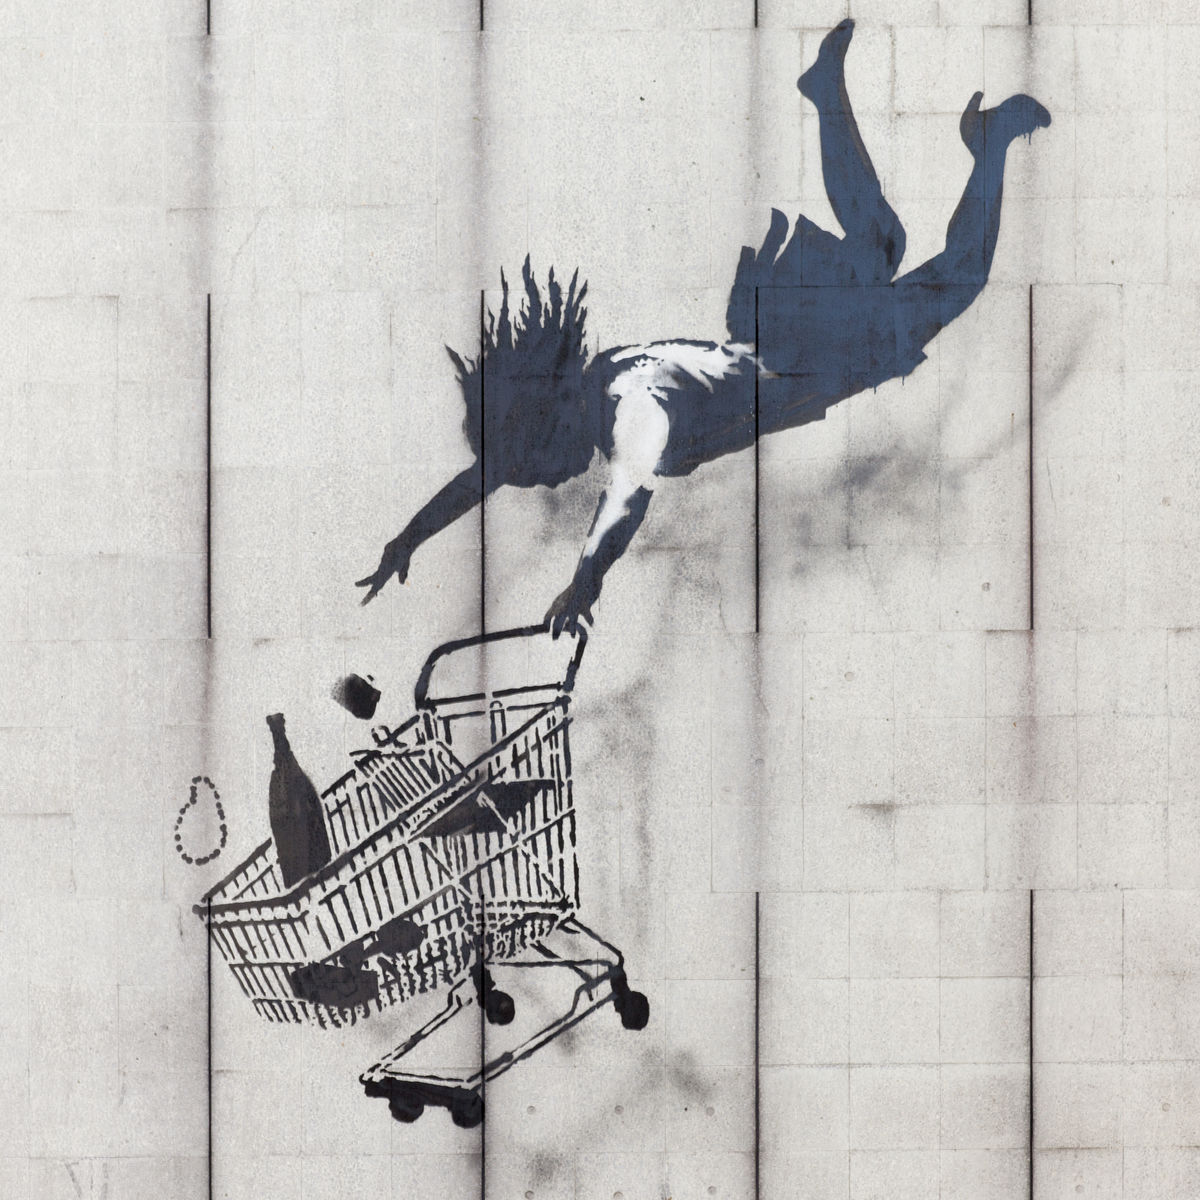 Banksyland' capitalizes on Banksy's anti-capitalist message